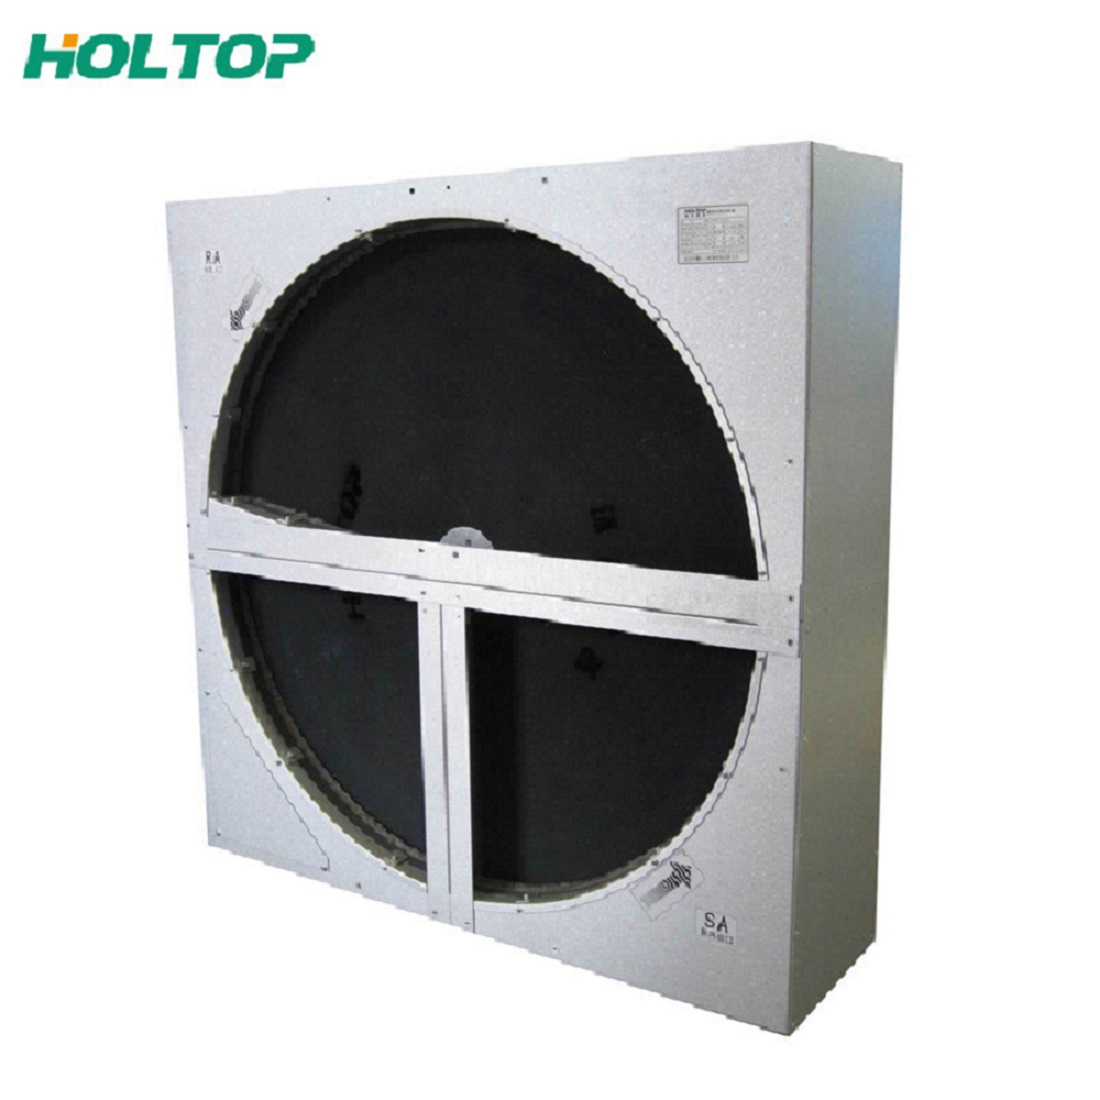 Heat Wheels (Rotary Heat Exchangers)